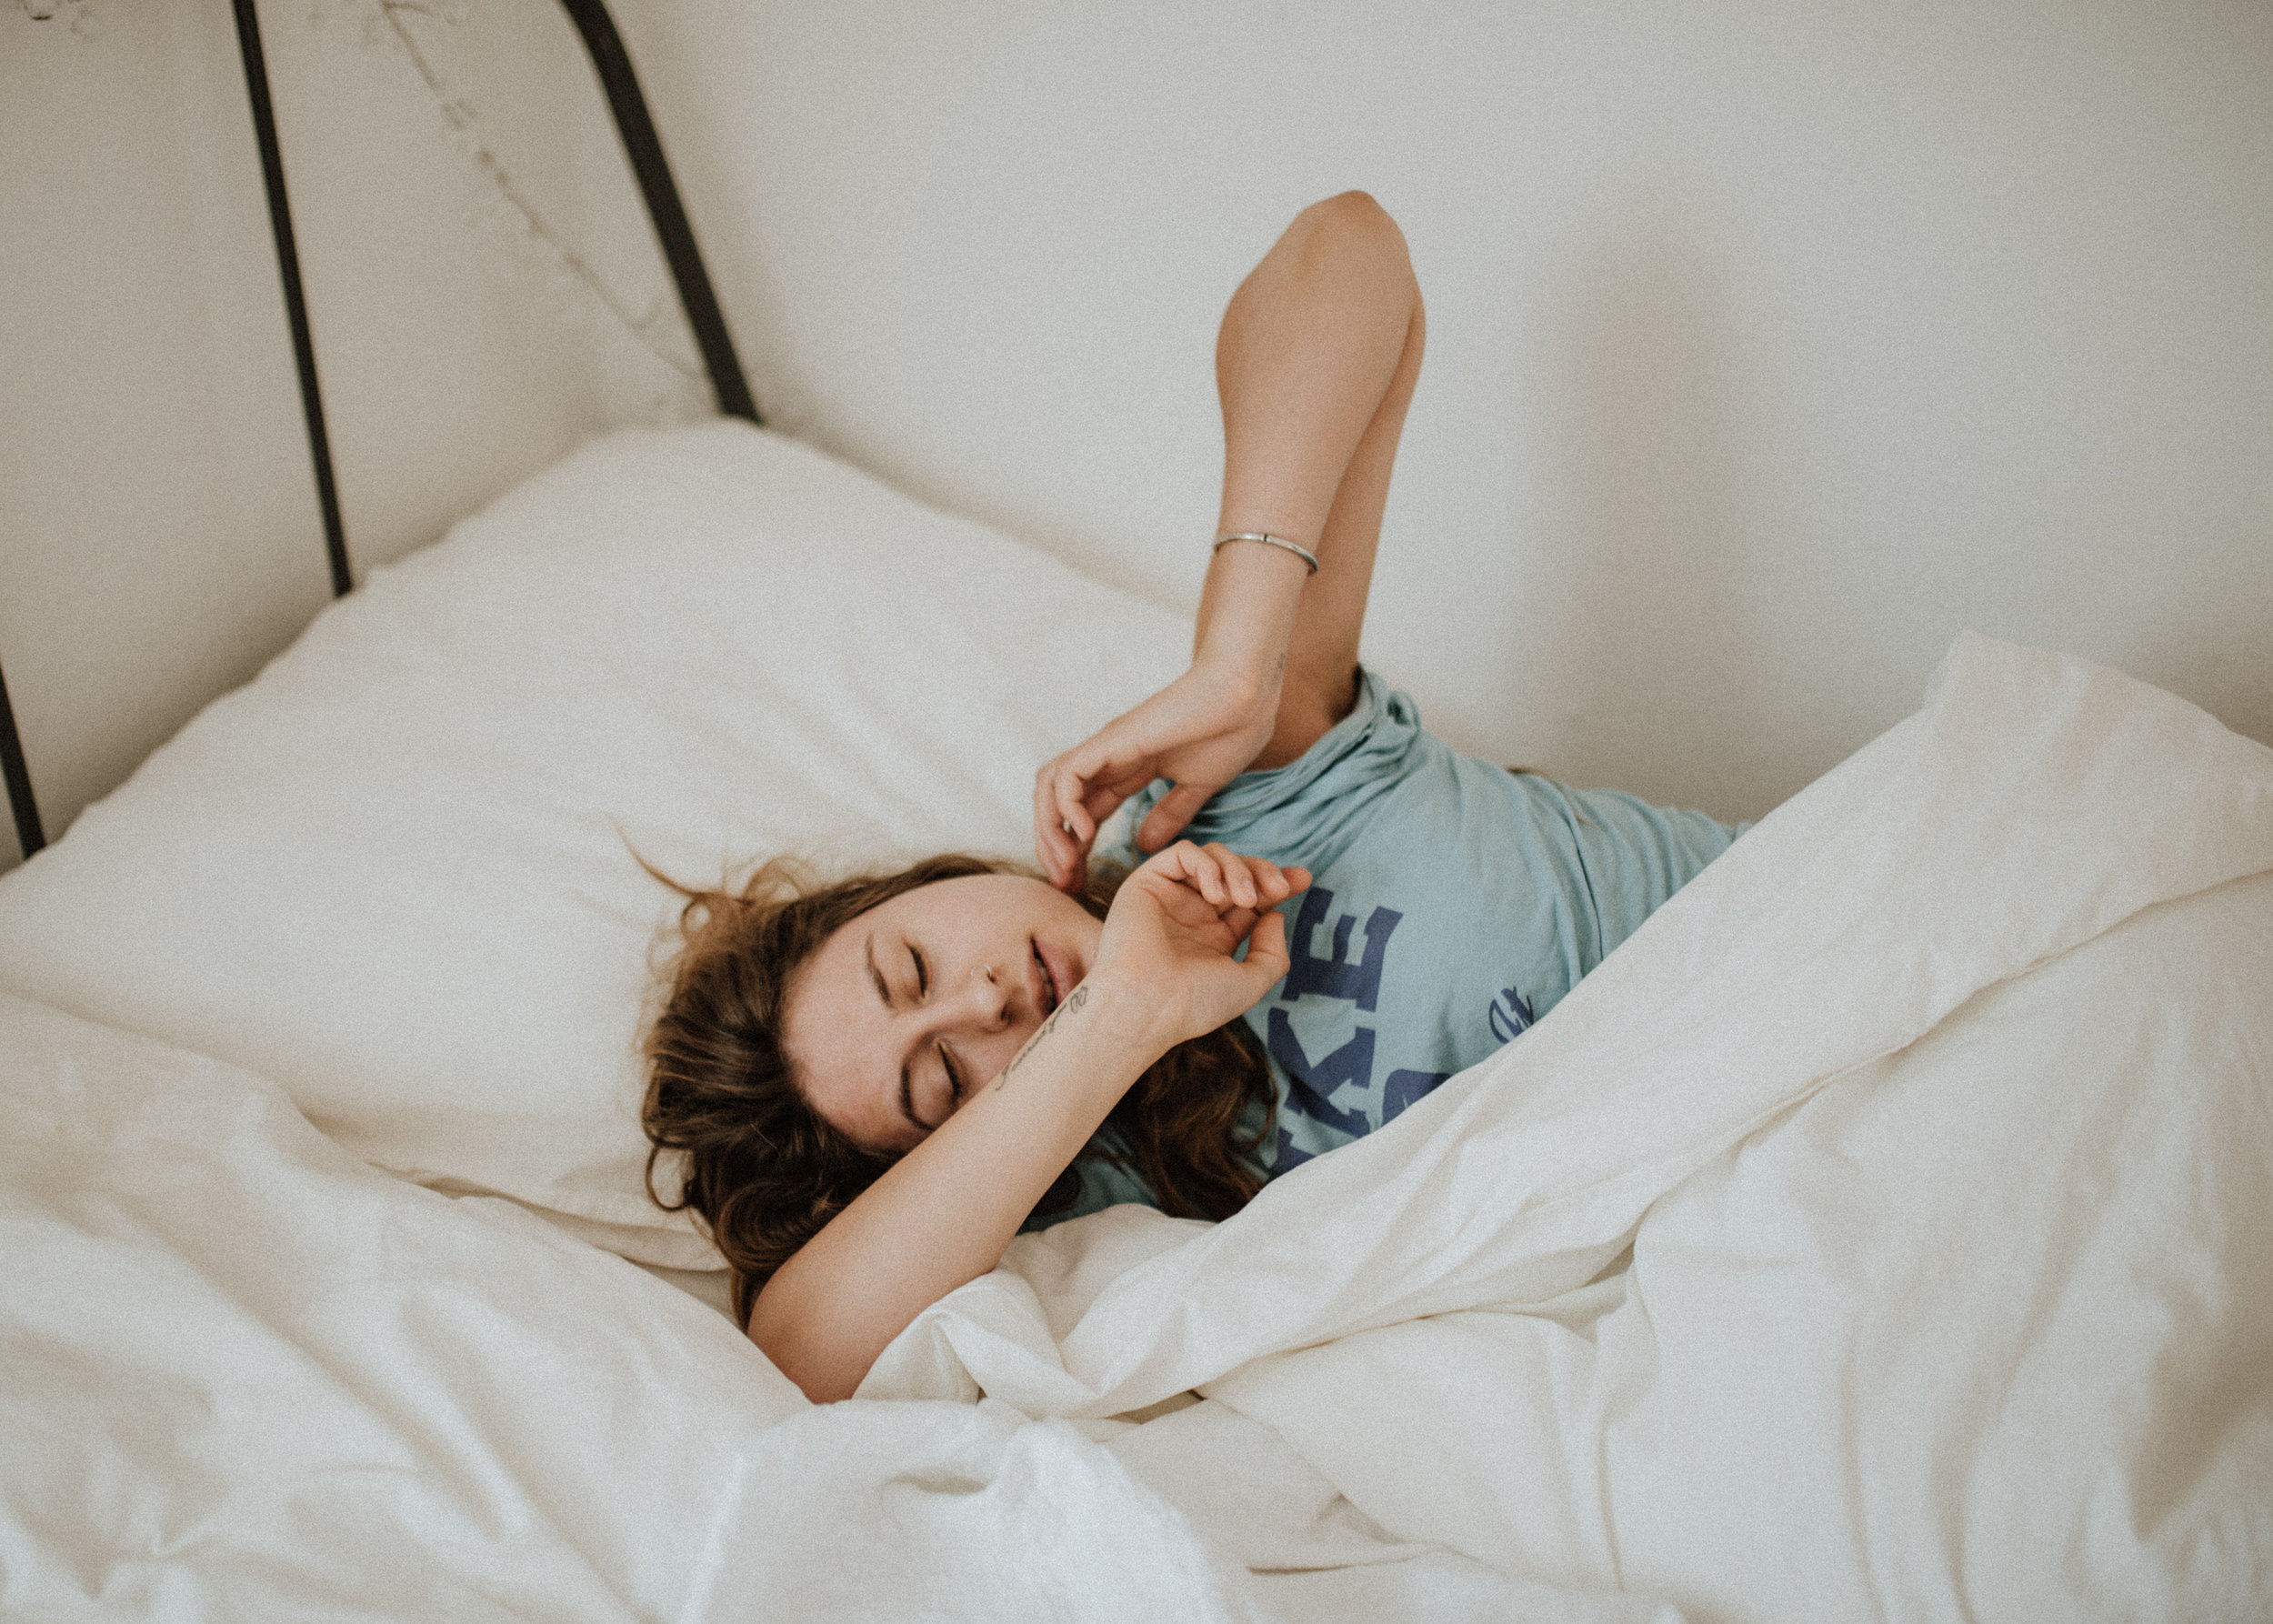 Why Should Women Make Sleep a Priority?